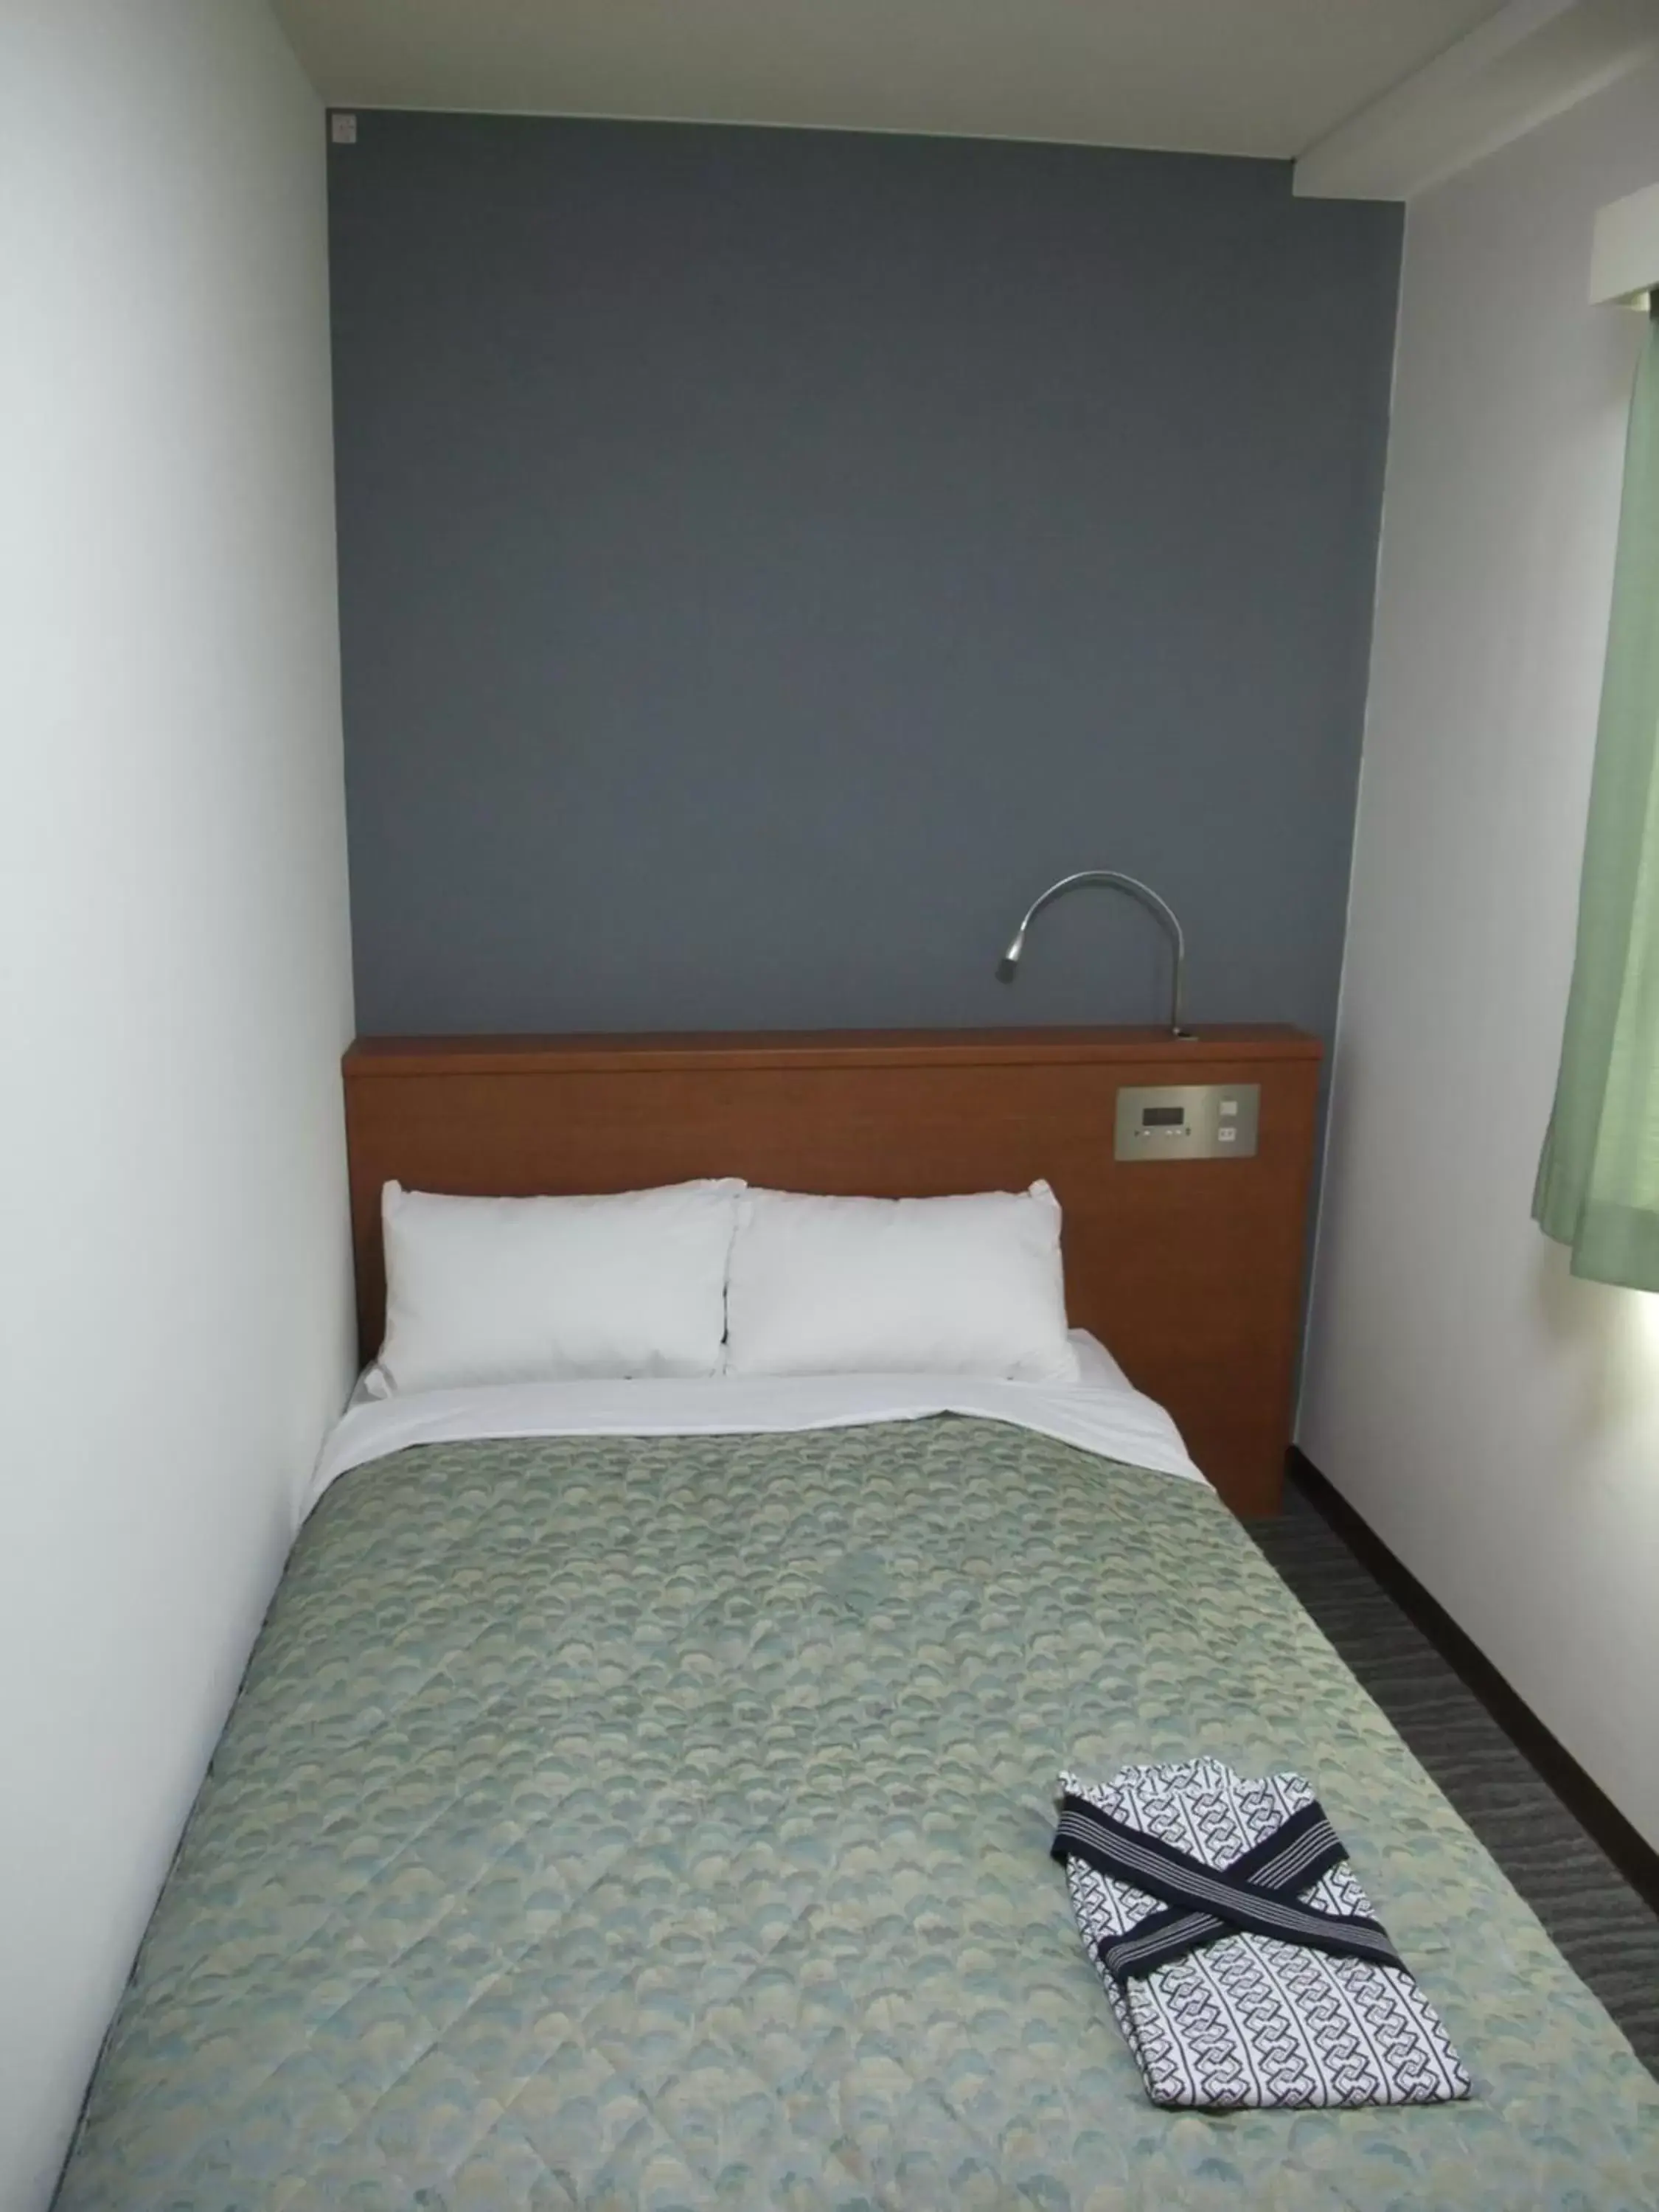 Bed, Room Photo in Hotel Tateshina